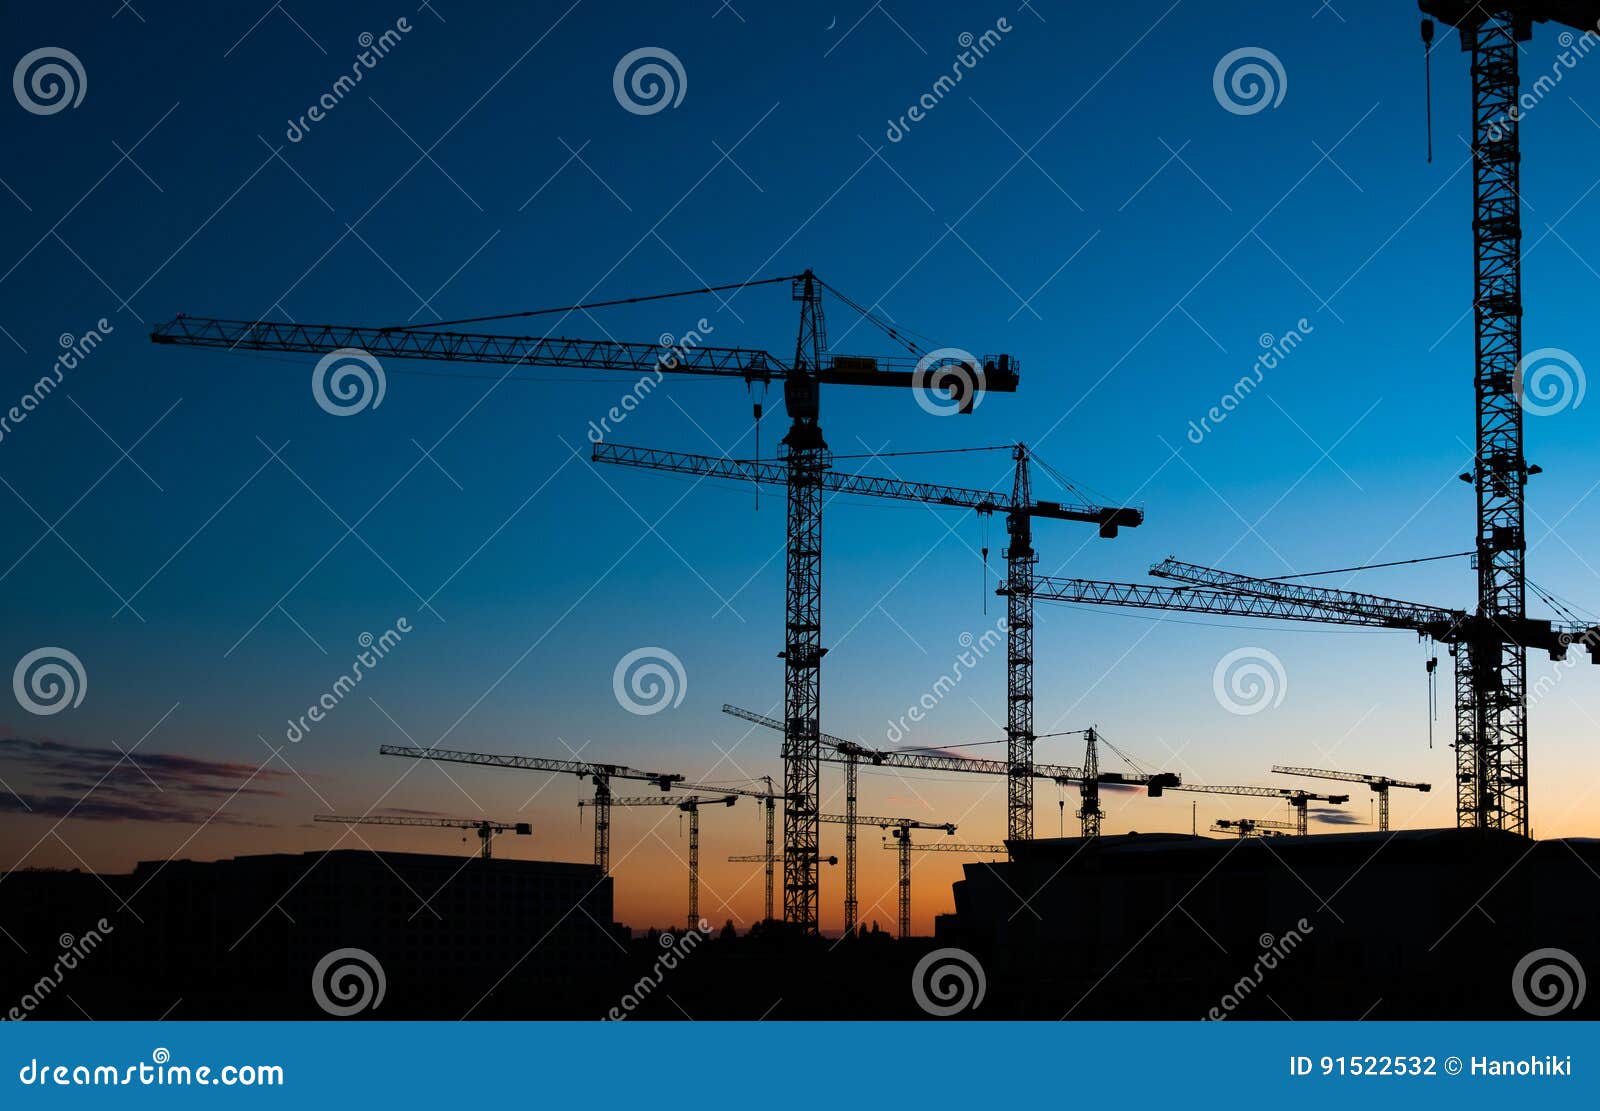 many construction cranes on sunset sky , crane silhouette skyline